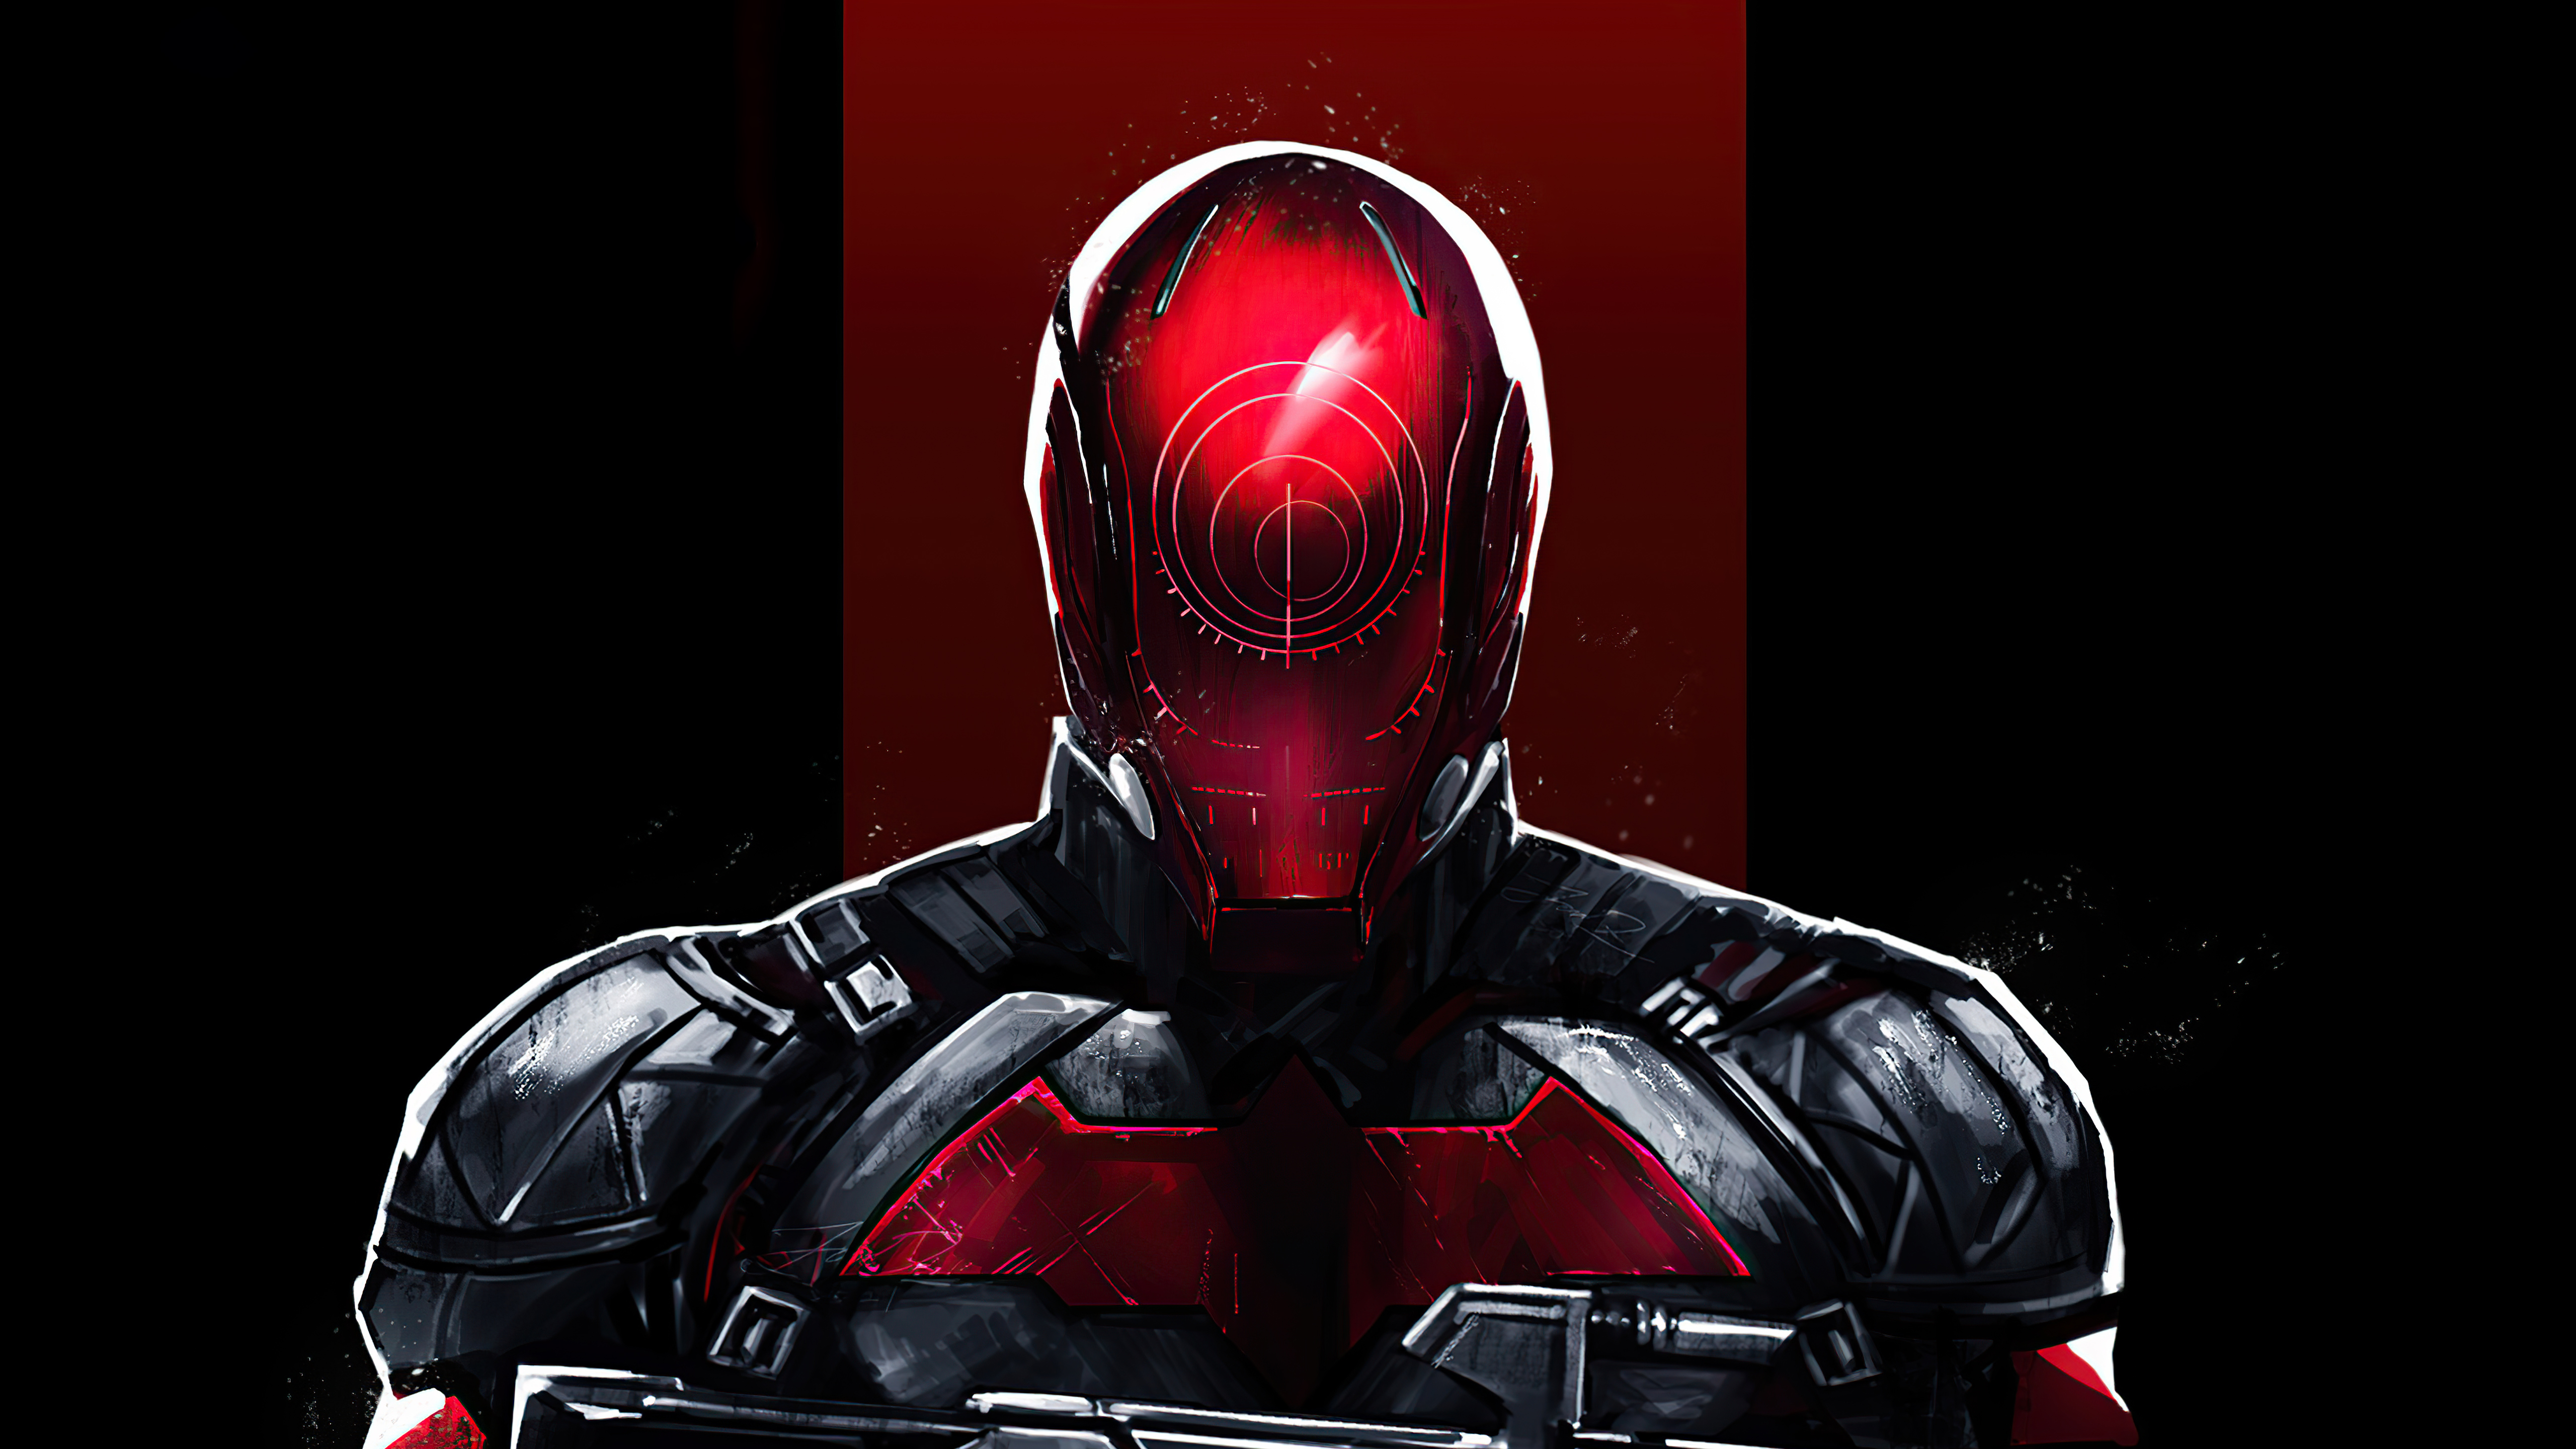 Desktop Wallpaper Red Hood Behind Mask Titans 2021 Hd Image Picture  Background D31cfa